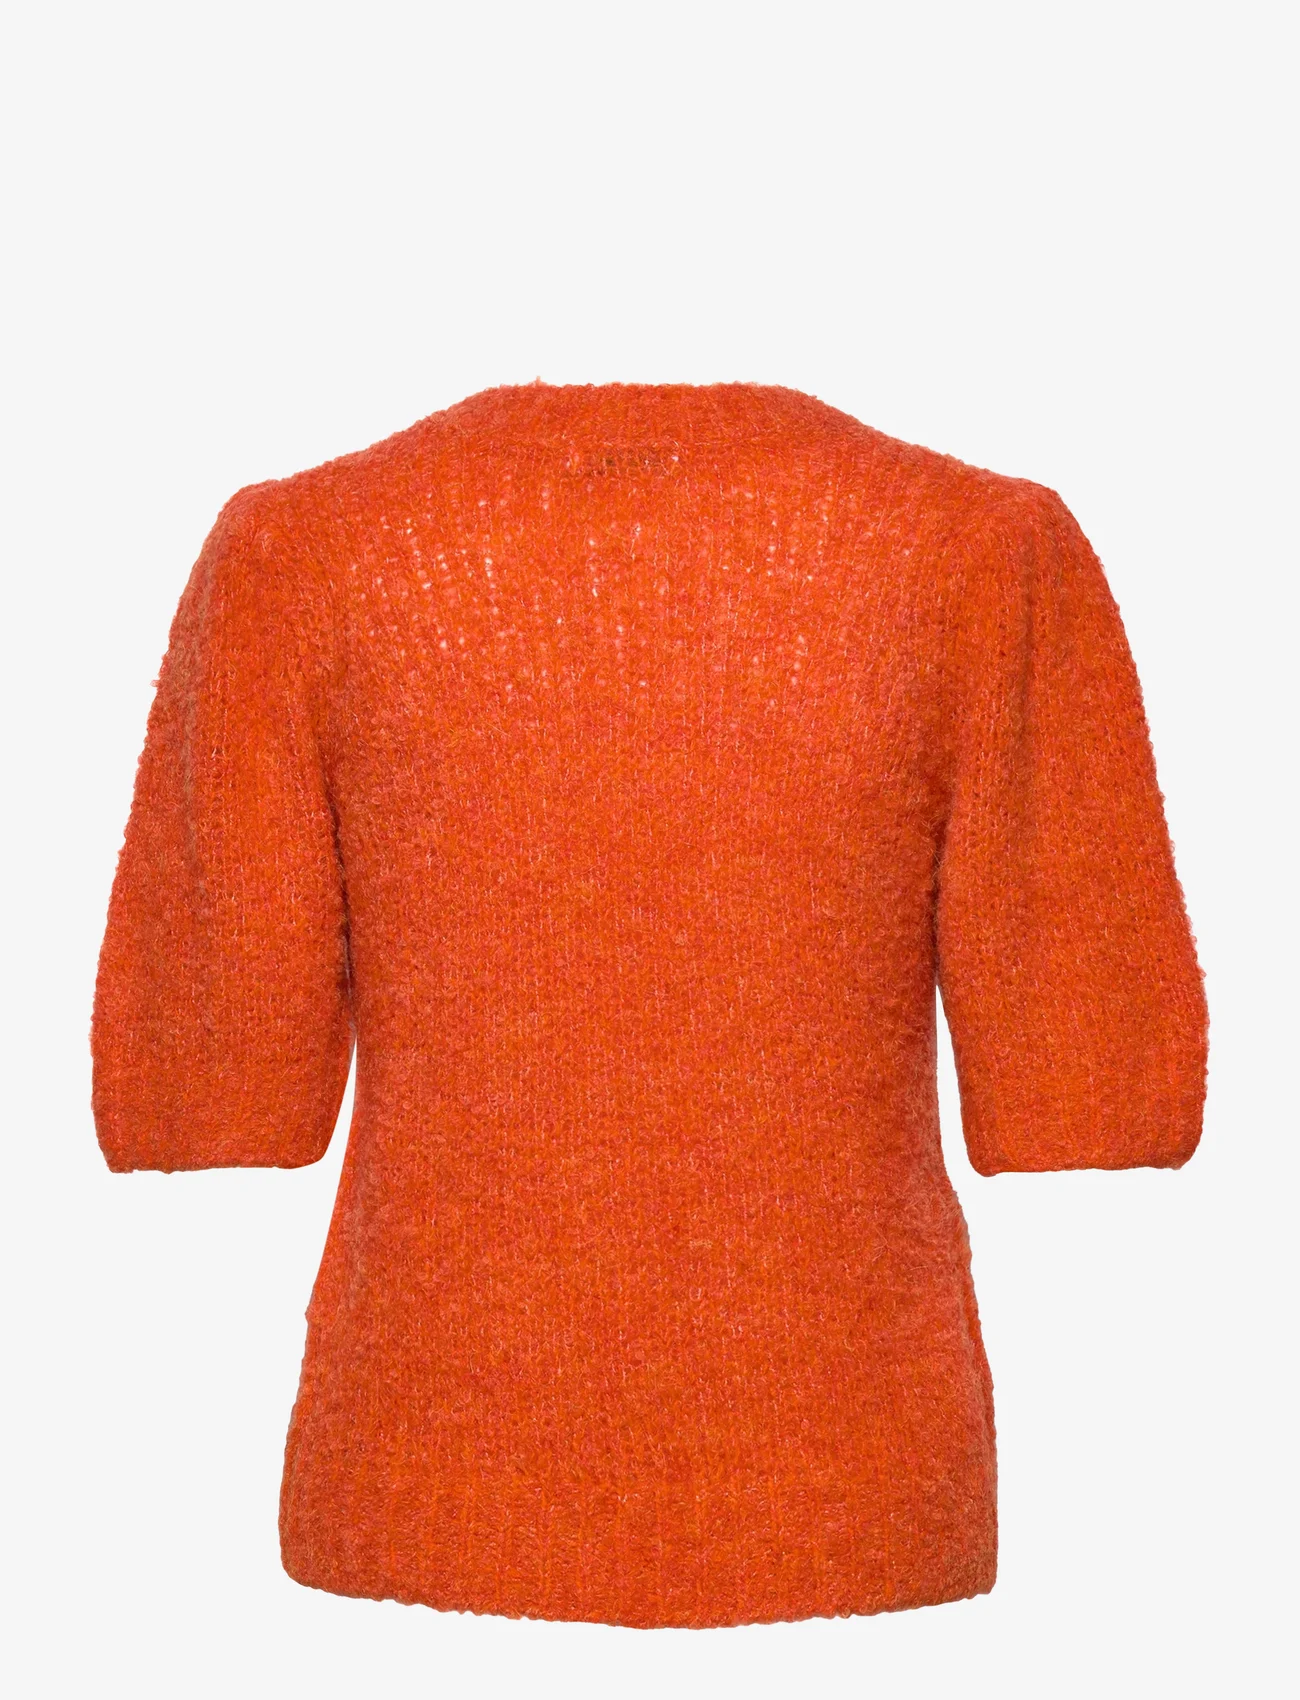 Coster Copenhagen - Knit with puff sleeves - orange melange - 1